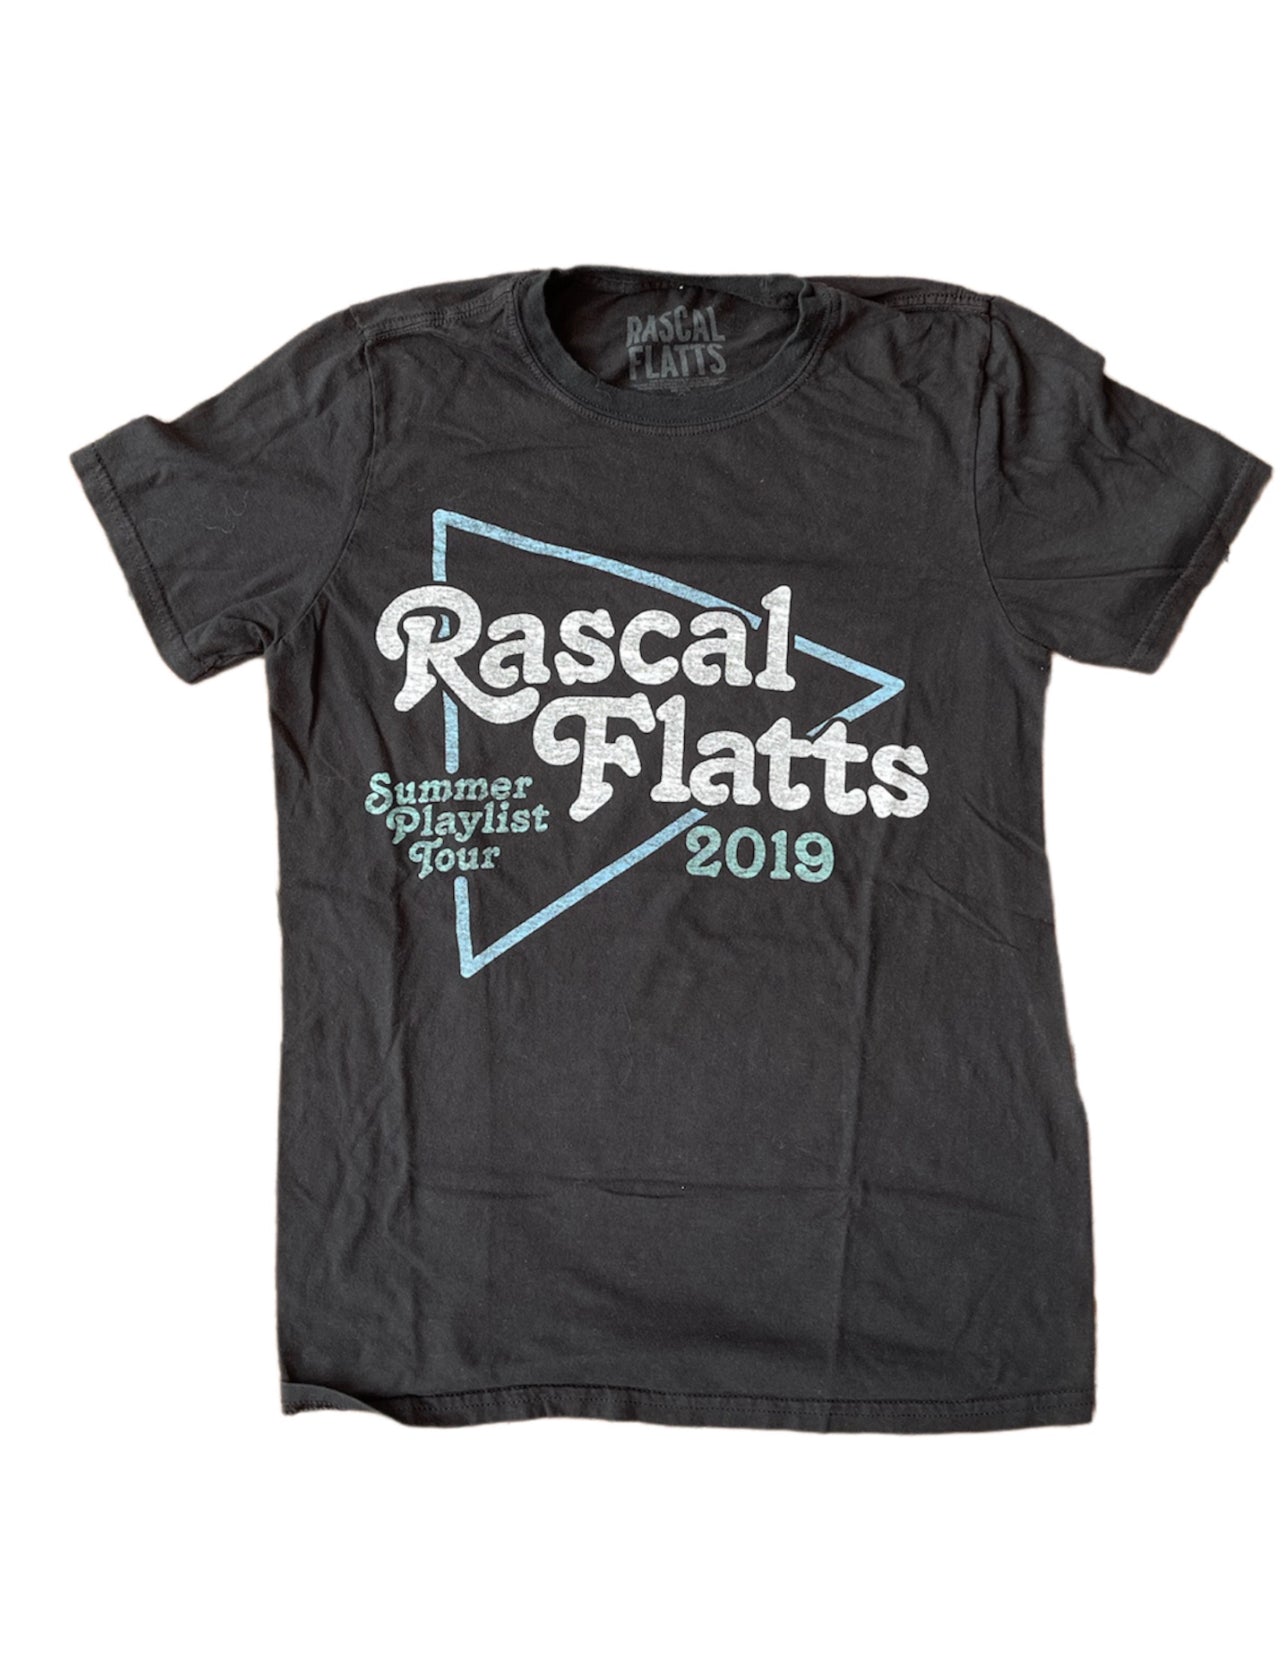 Rascal Flatts 2019 Concert Tee